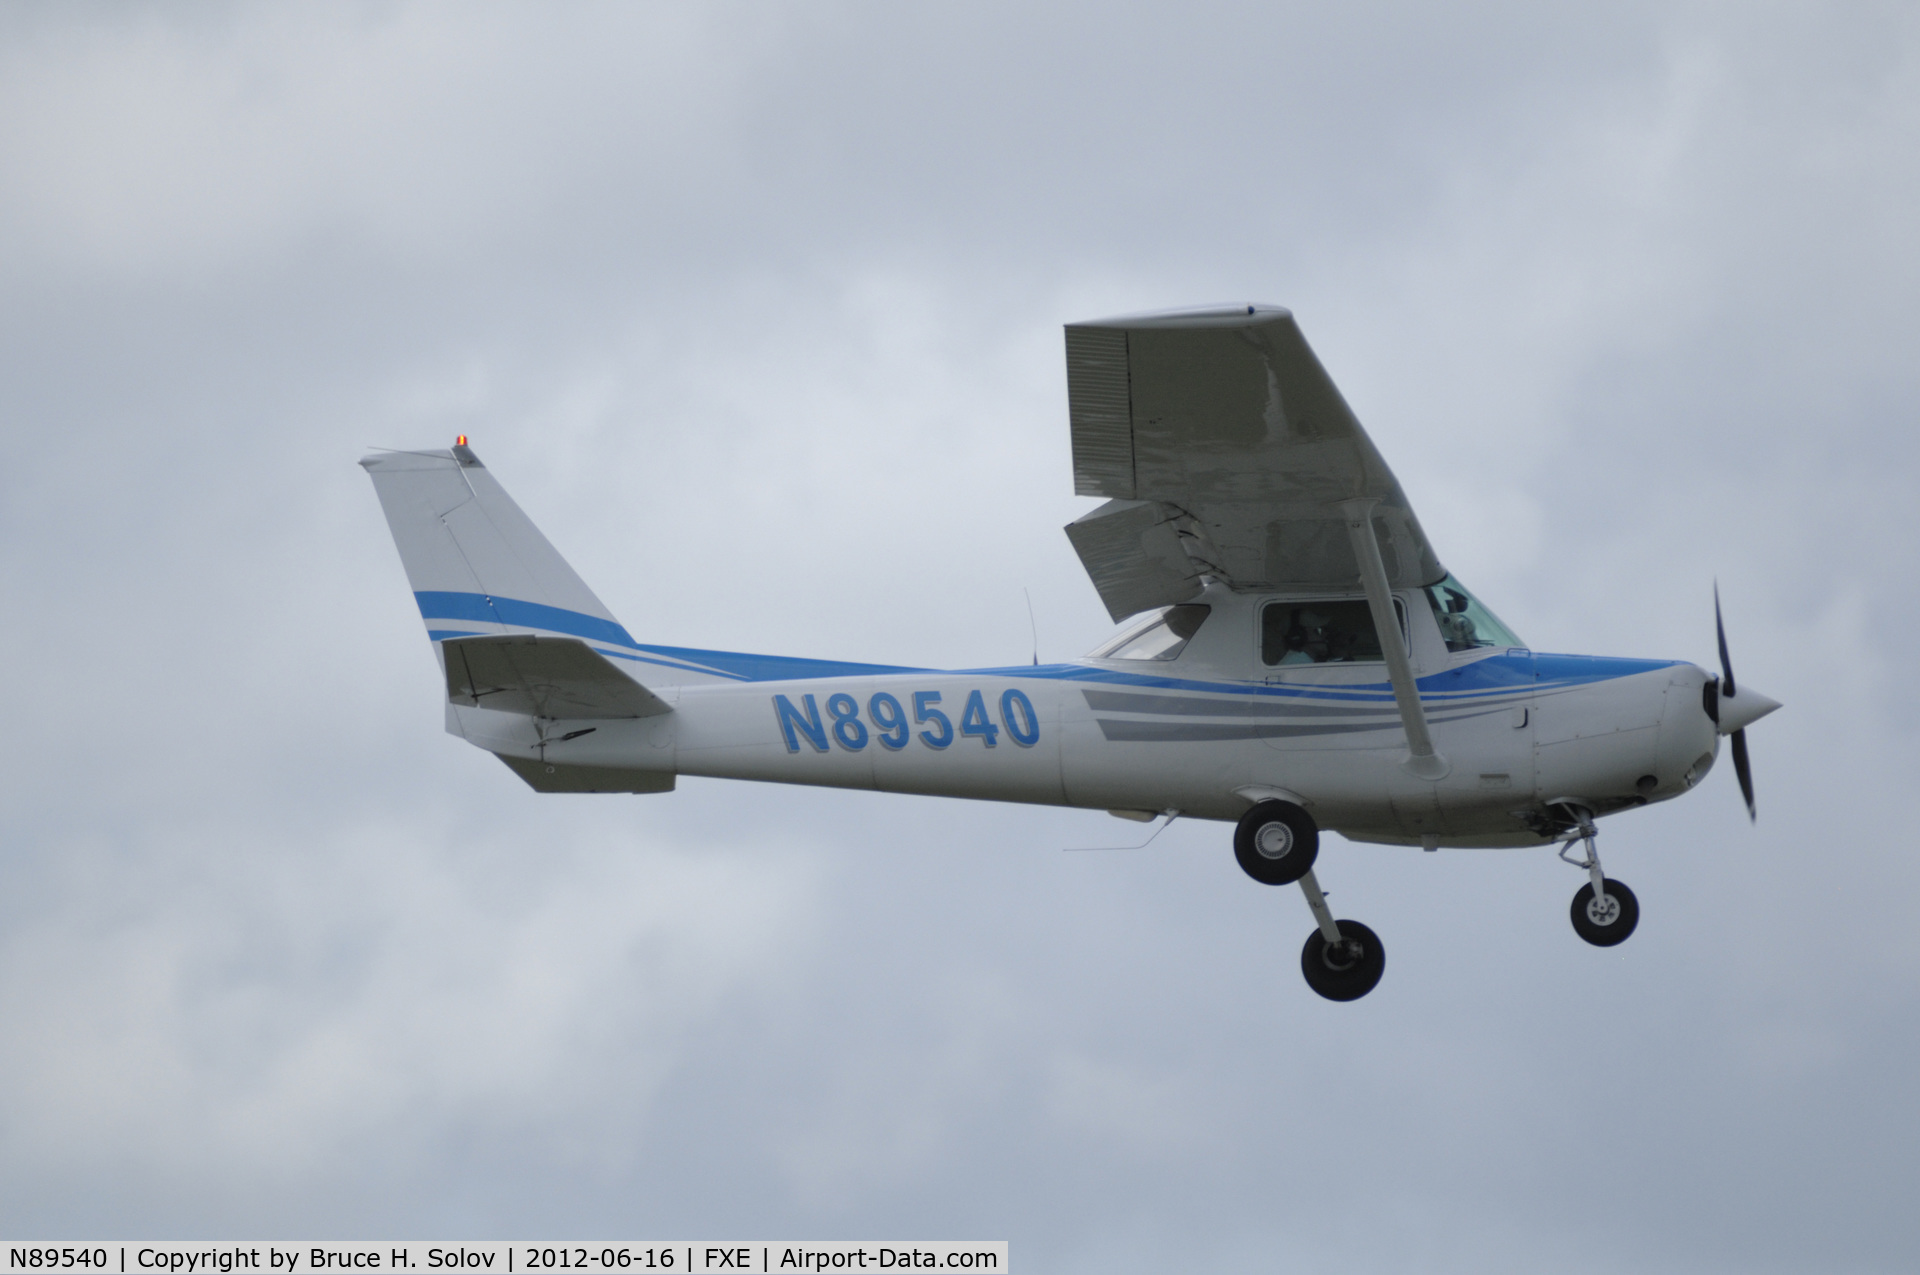 N89540, 1978 Cessna 152 C/N 15282776, On approach to Runway 8